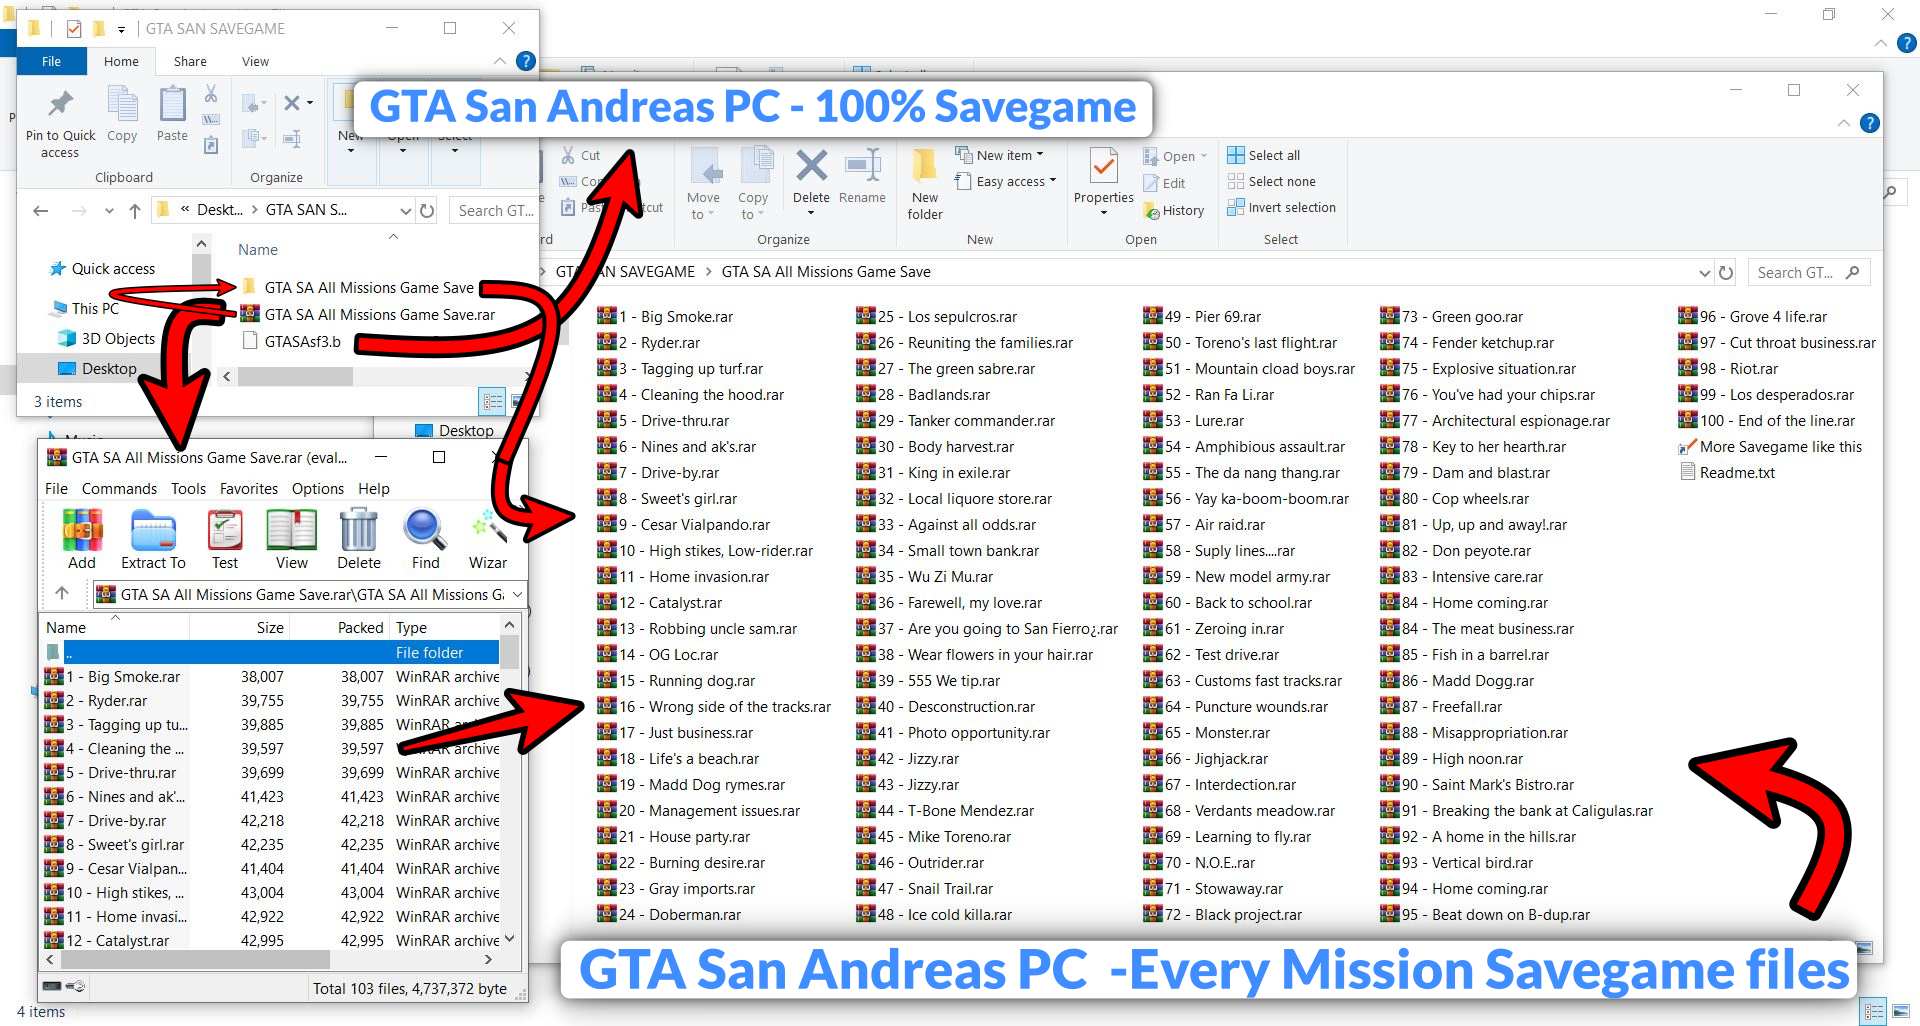 GTA San andreas PC - 100% Savegame + Every Mission savegame file